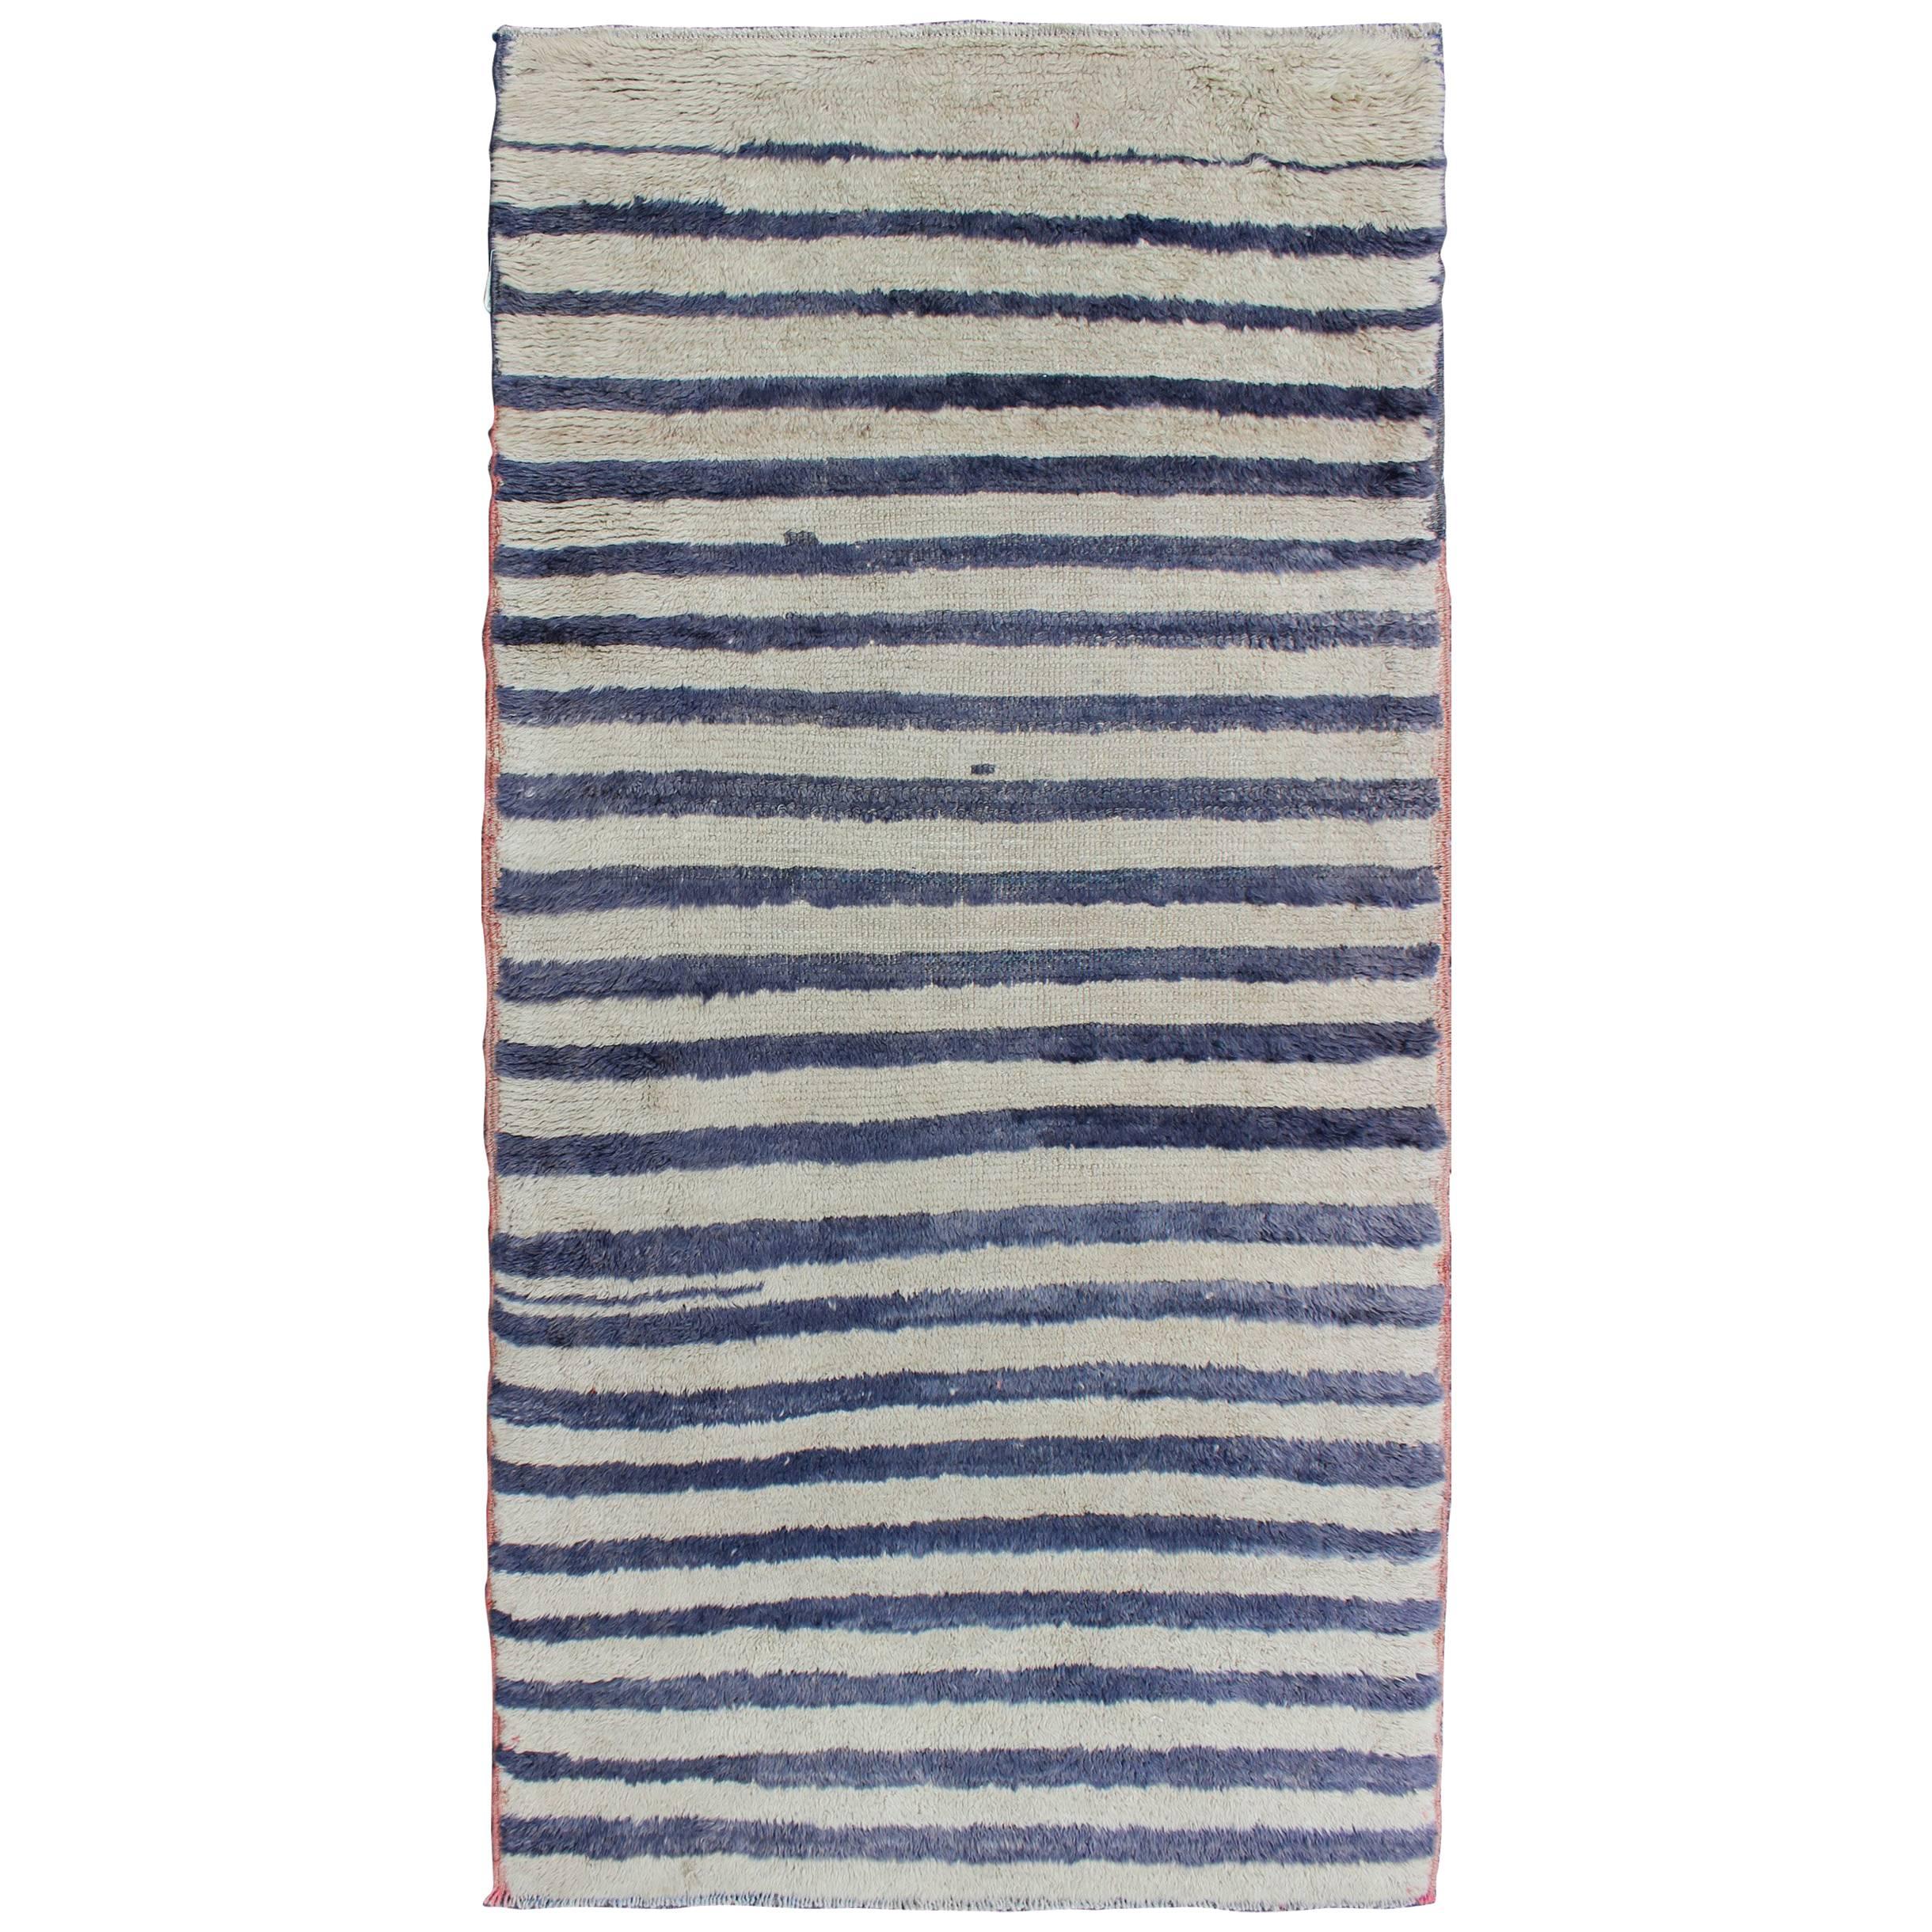 Turkish Angora Tulu Carpet with Cream and Navy Blue Stripe Pattern